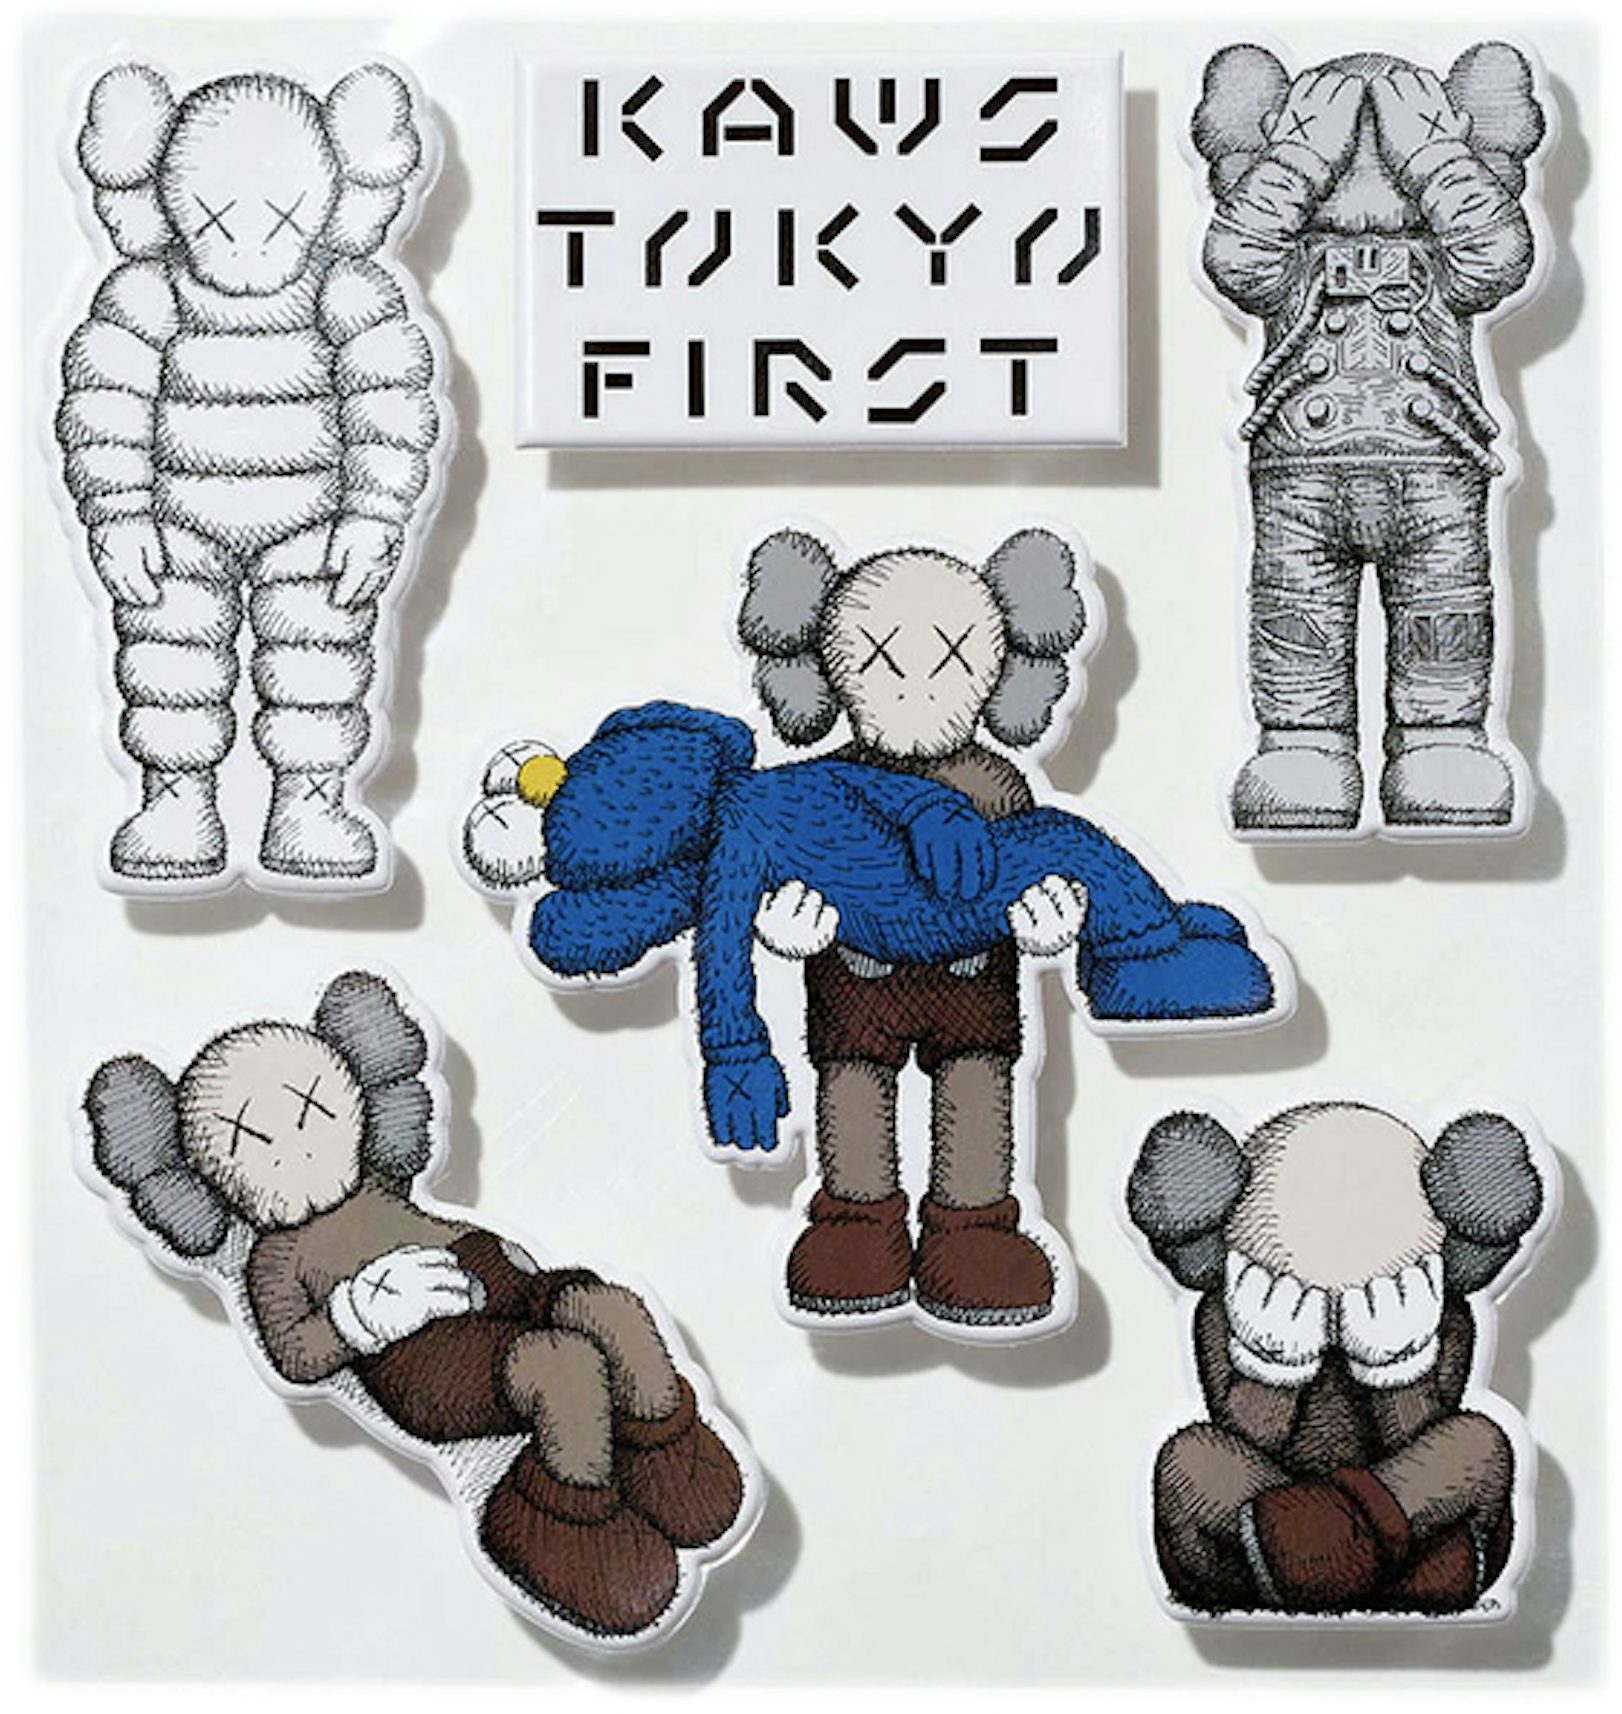 Schlüsselanhänger-Set KAWS Tokyo First Flayed Companion braun/grau/schwarz  (2021) - DE